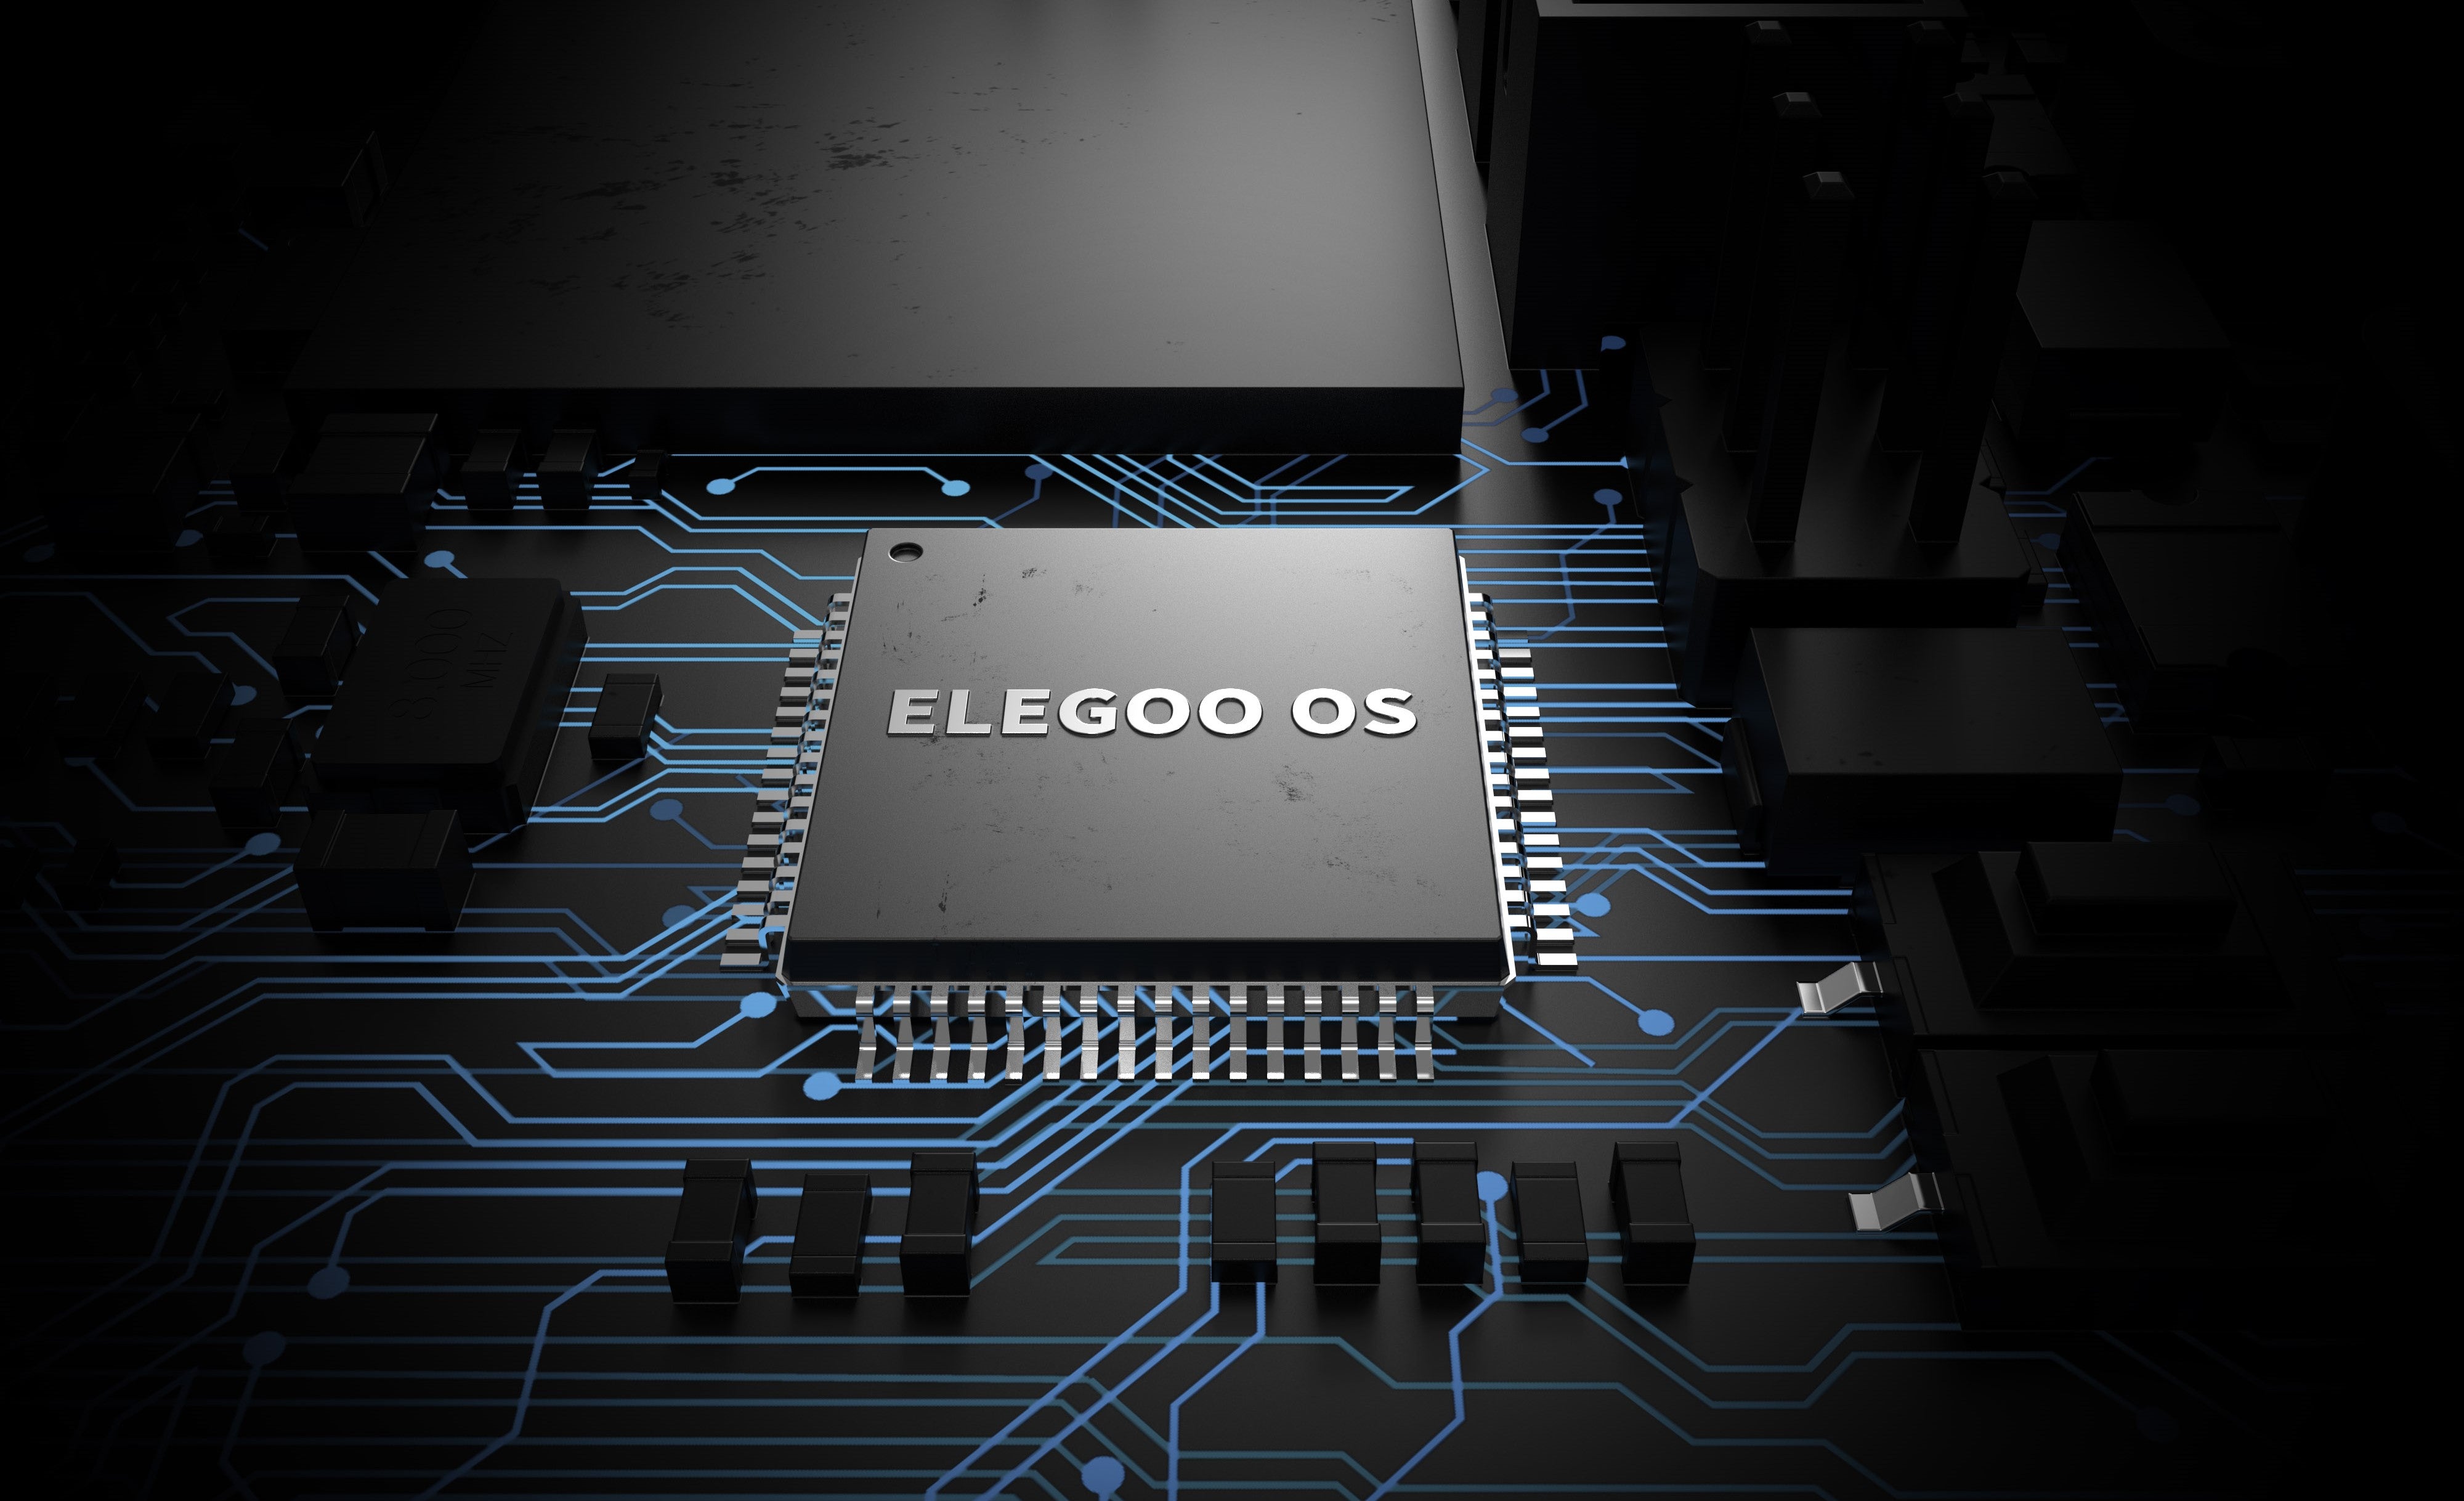  Elegoo - Neptune 4 Pro - Imprimante 3D FDM Grande